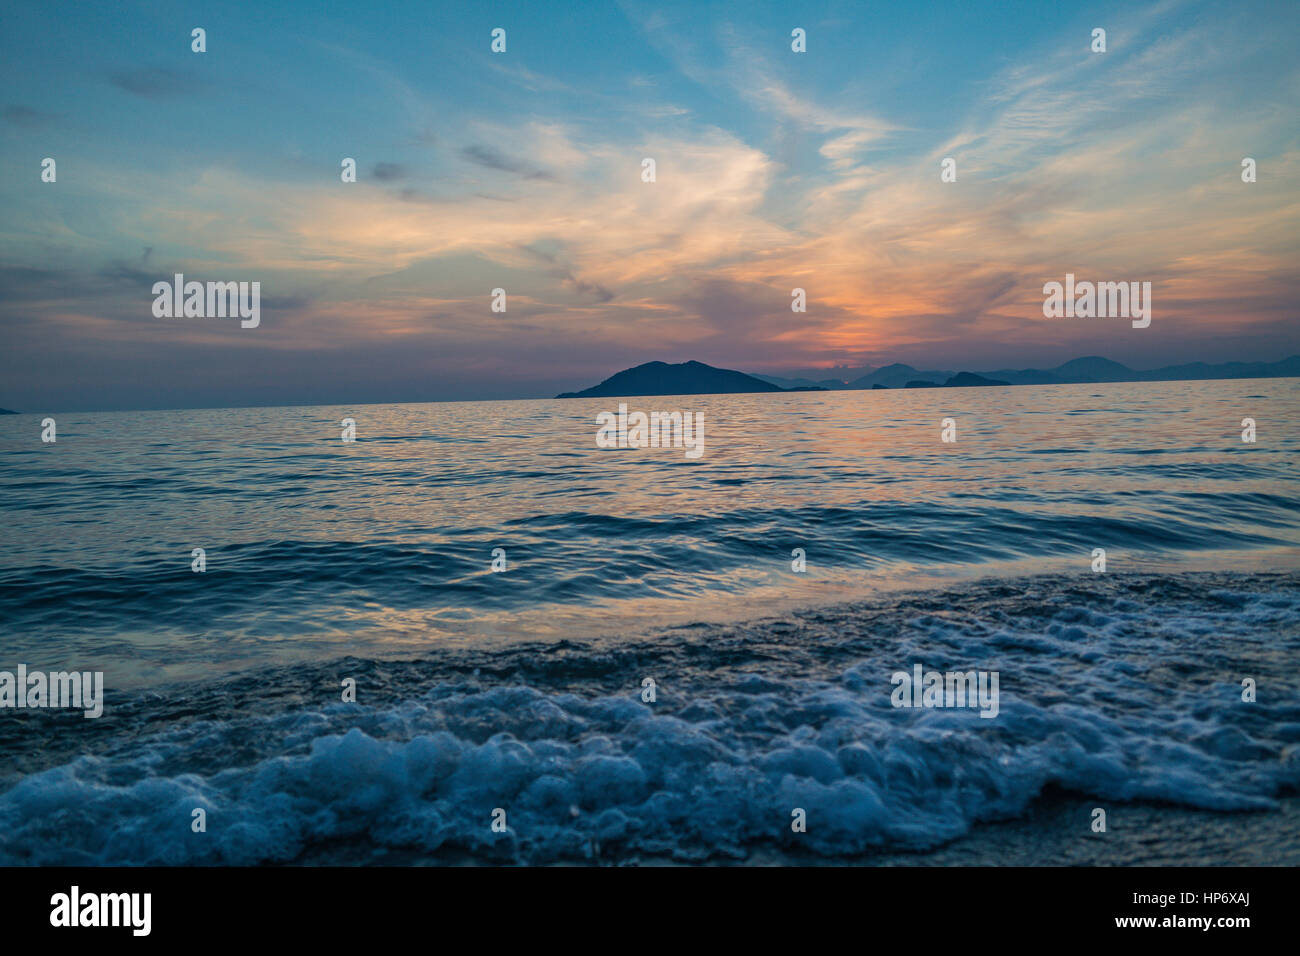 heavenlike sunset beach - muhtesem gun batimi manzarasi, multi coloured sunset view Stock Photo